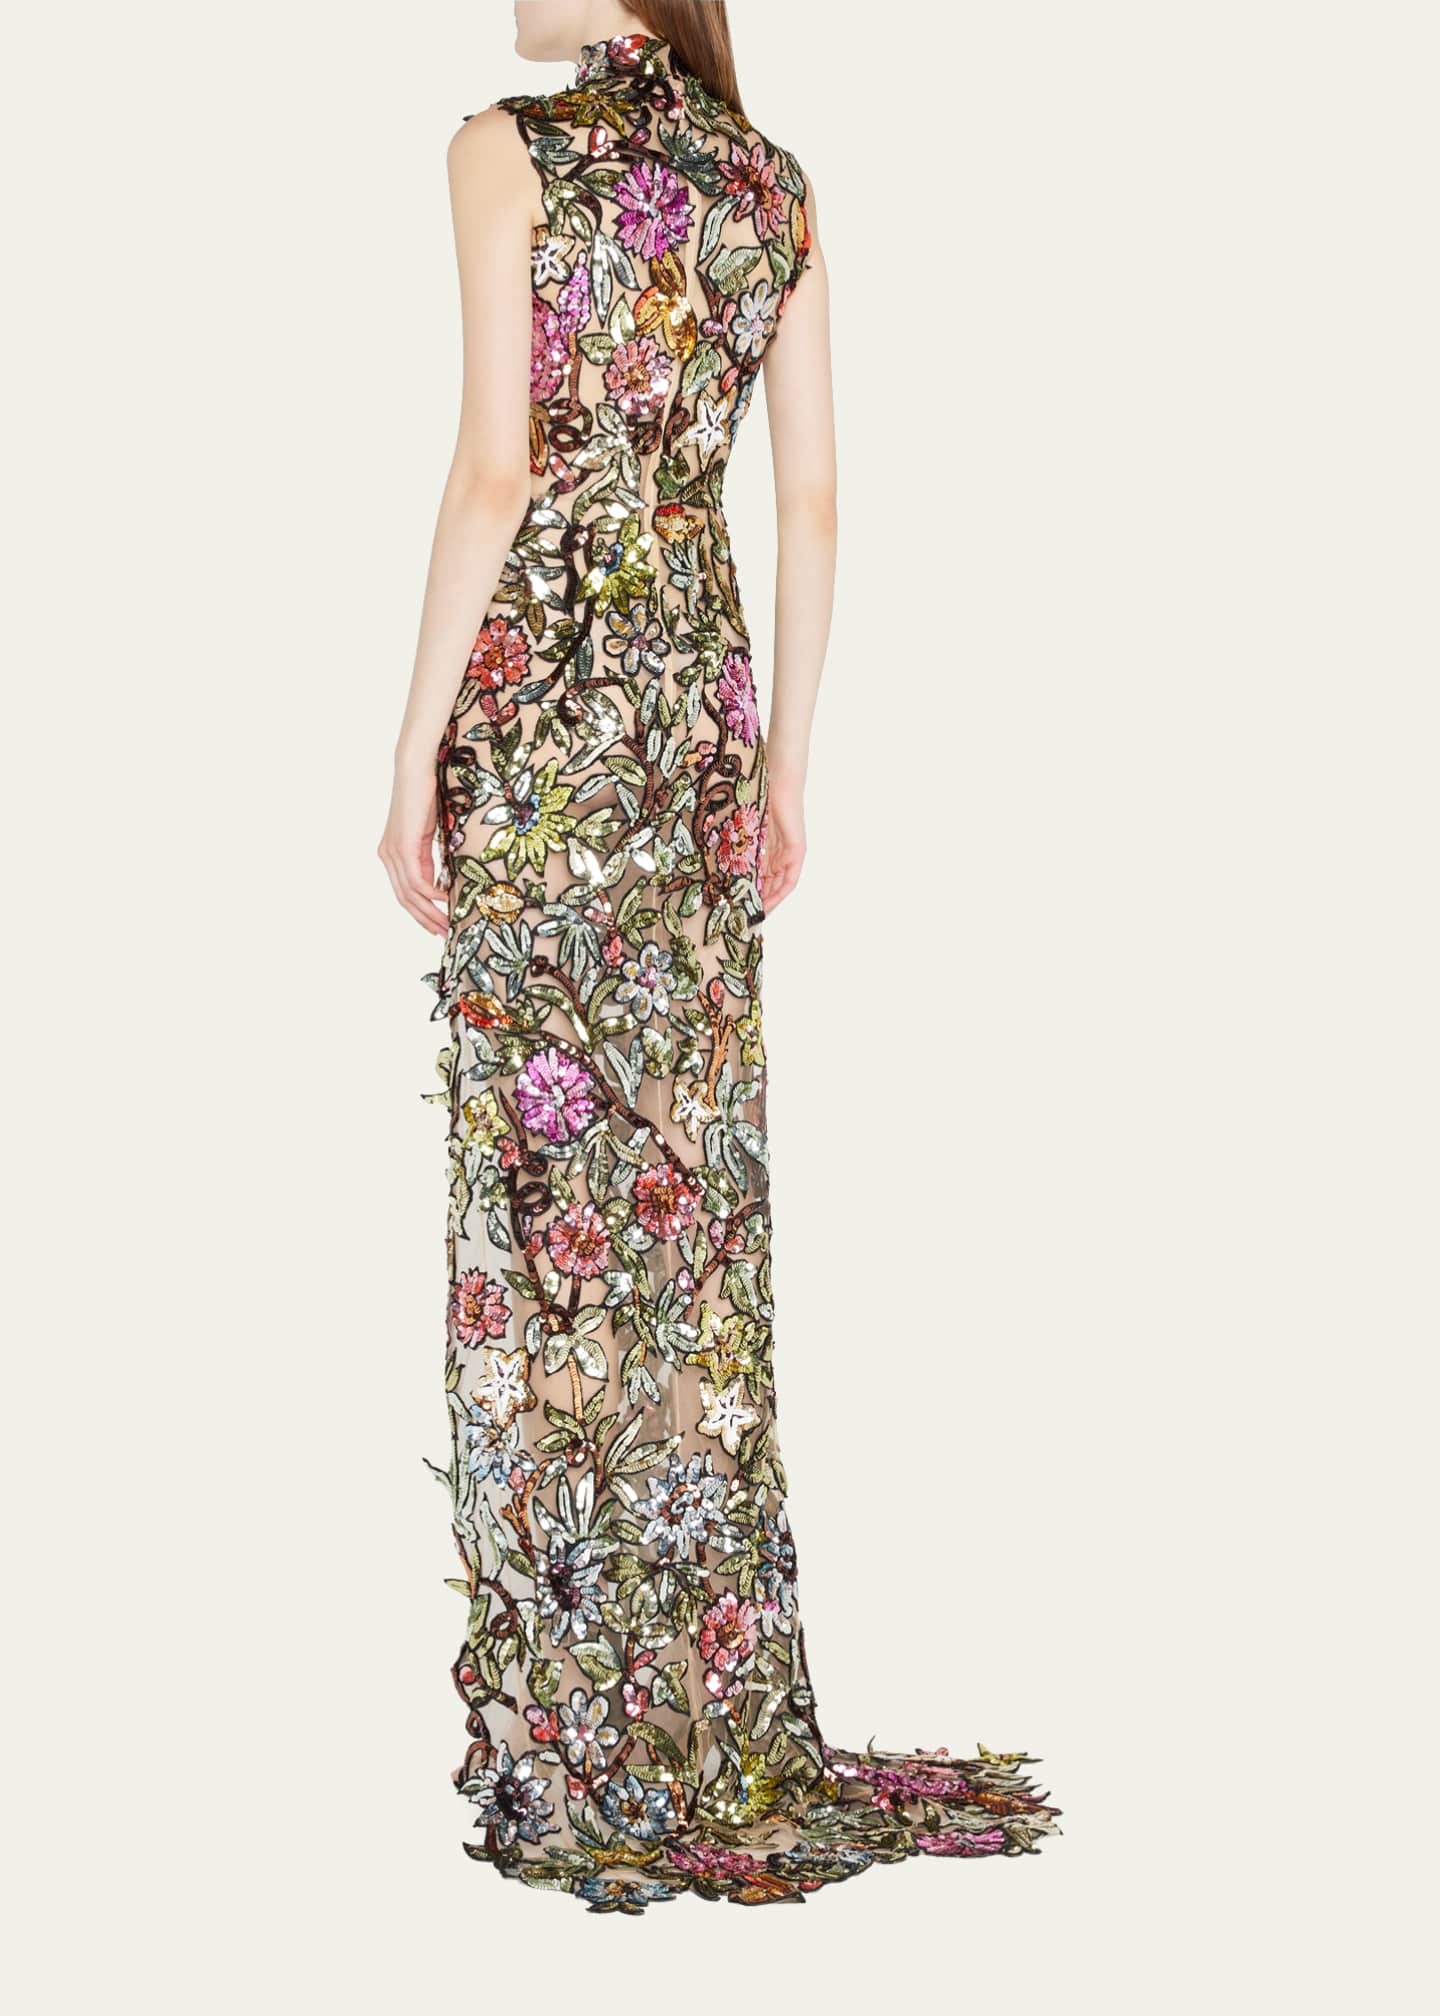 Oscar de la Renta Floral Sequin Embroidered Gown - Bergdorf Goodman